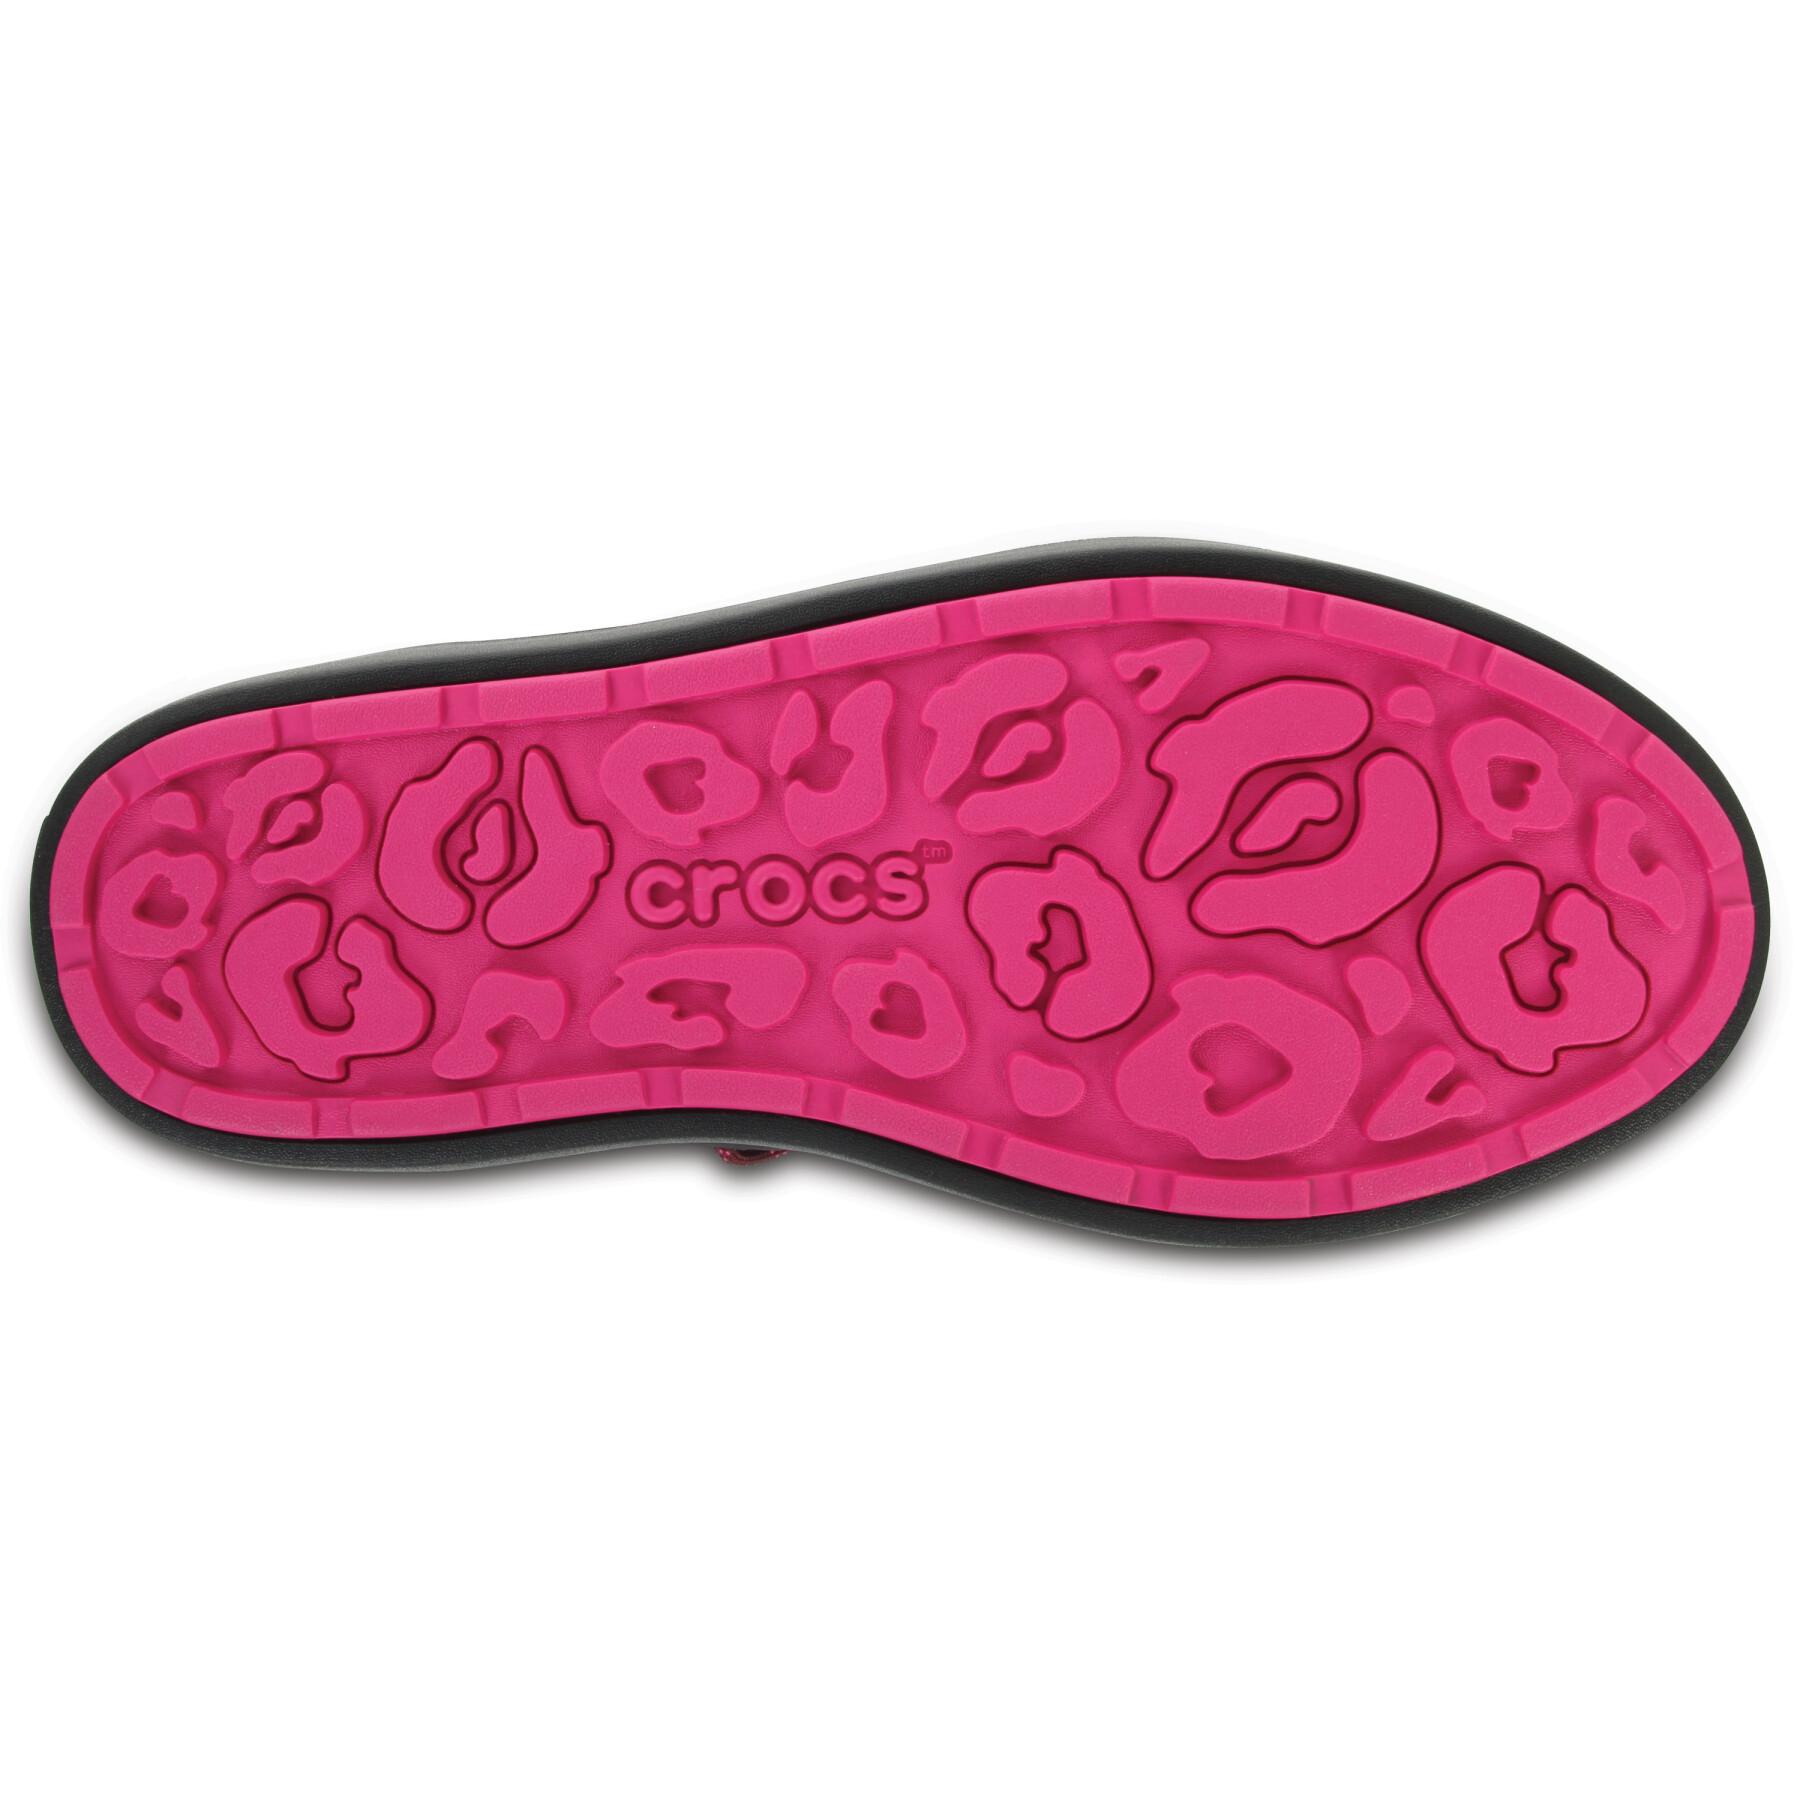 Damen-Schneestiefel Crocs lodgepoint graphic lace